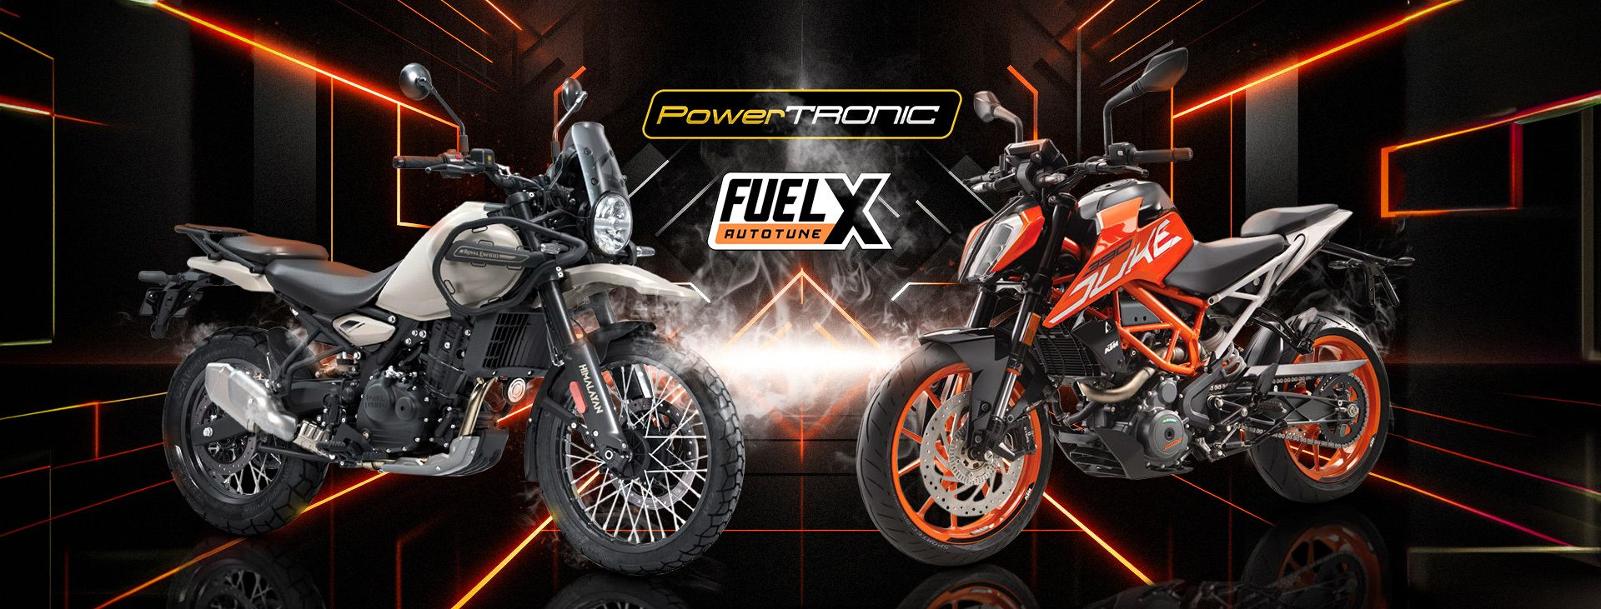 Powertronic - FuelX